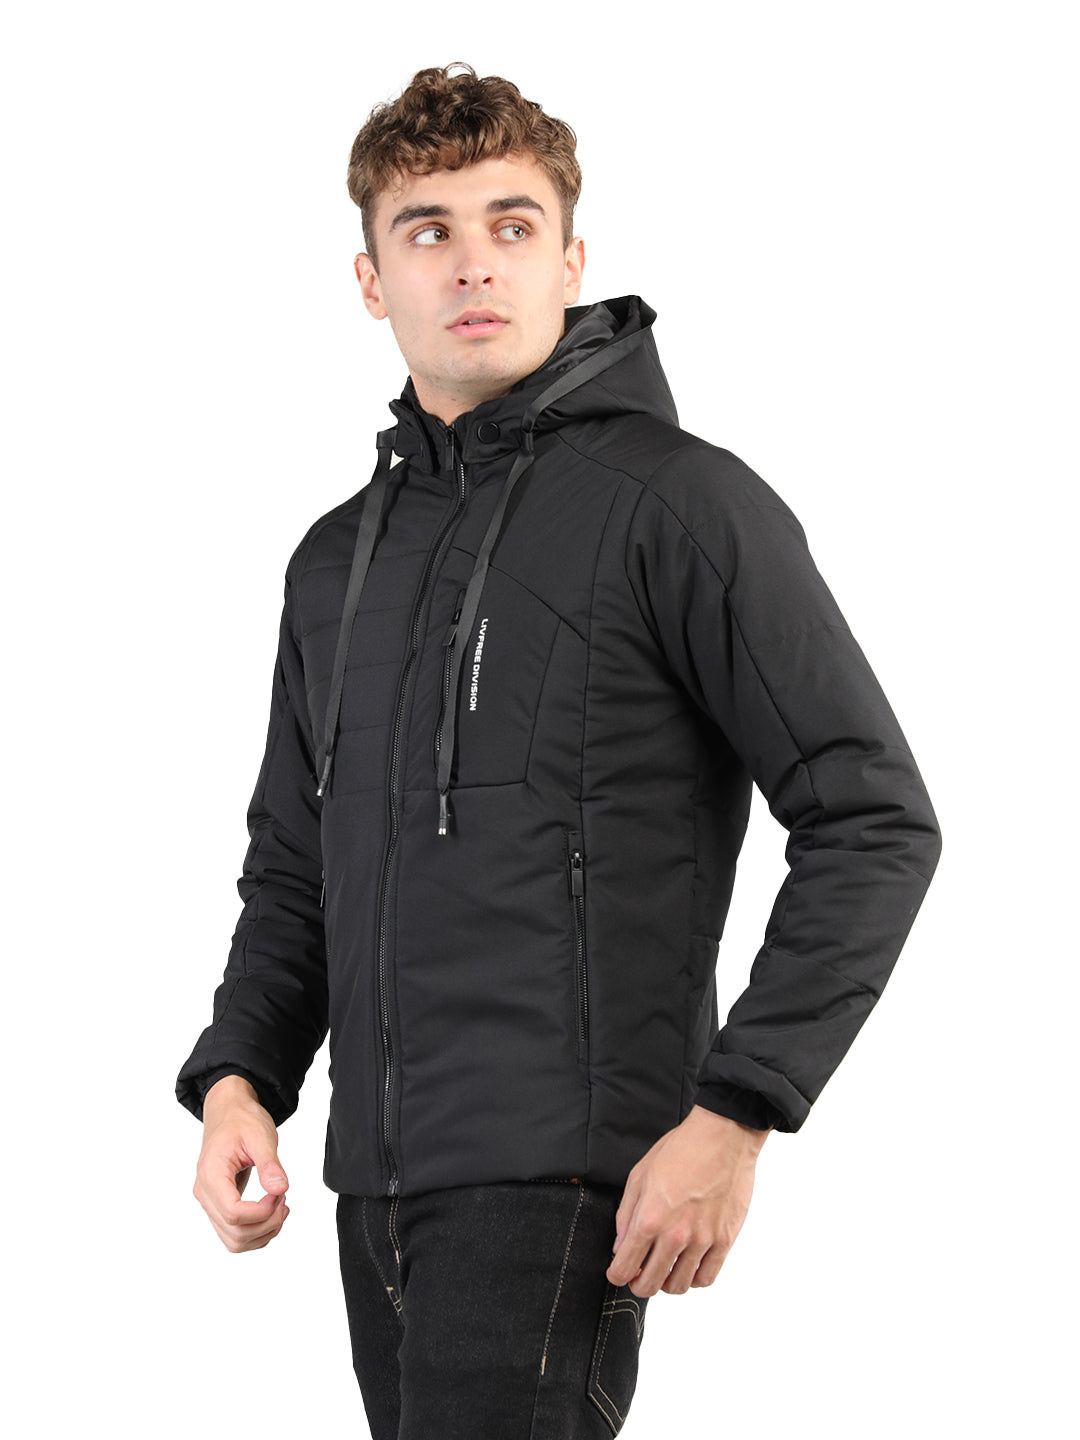 Livfree Gents Full Sleeve Hoody Solid Regular Fit Jacket-Black